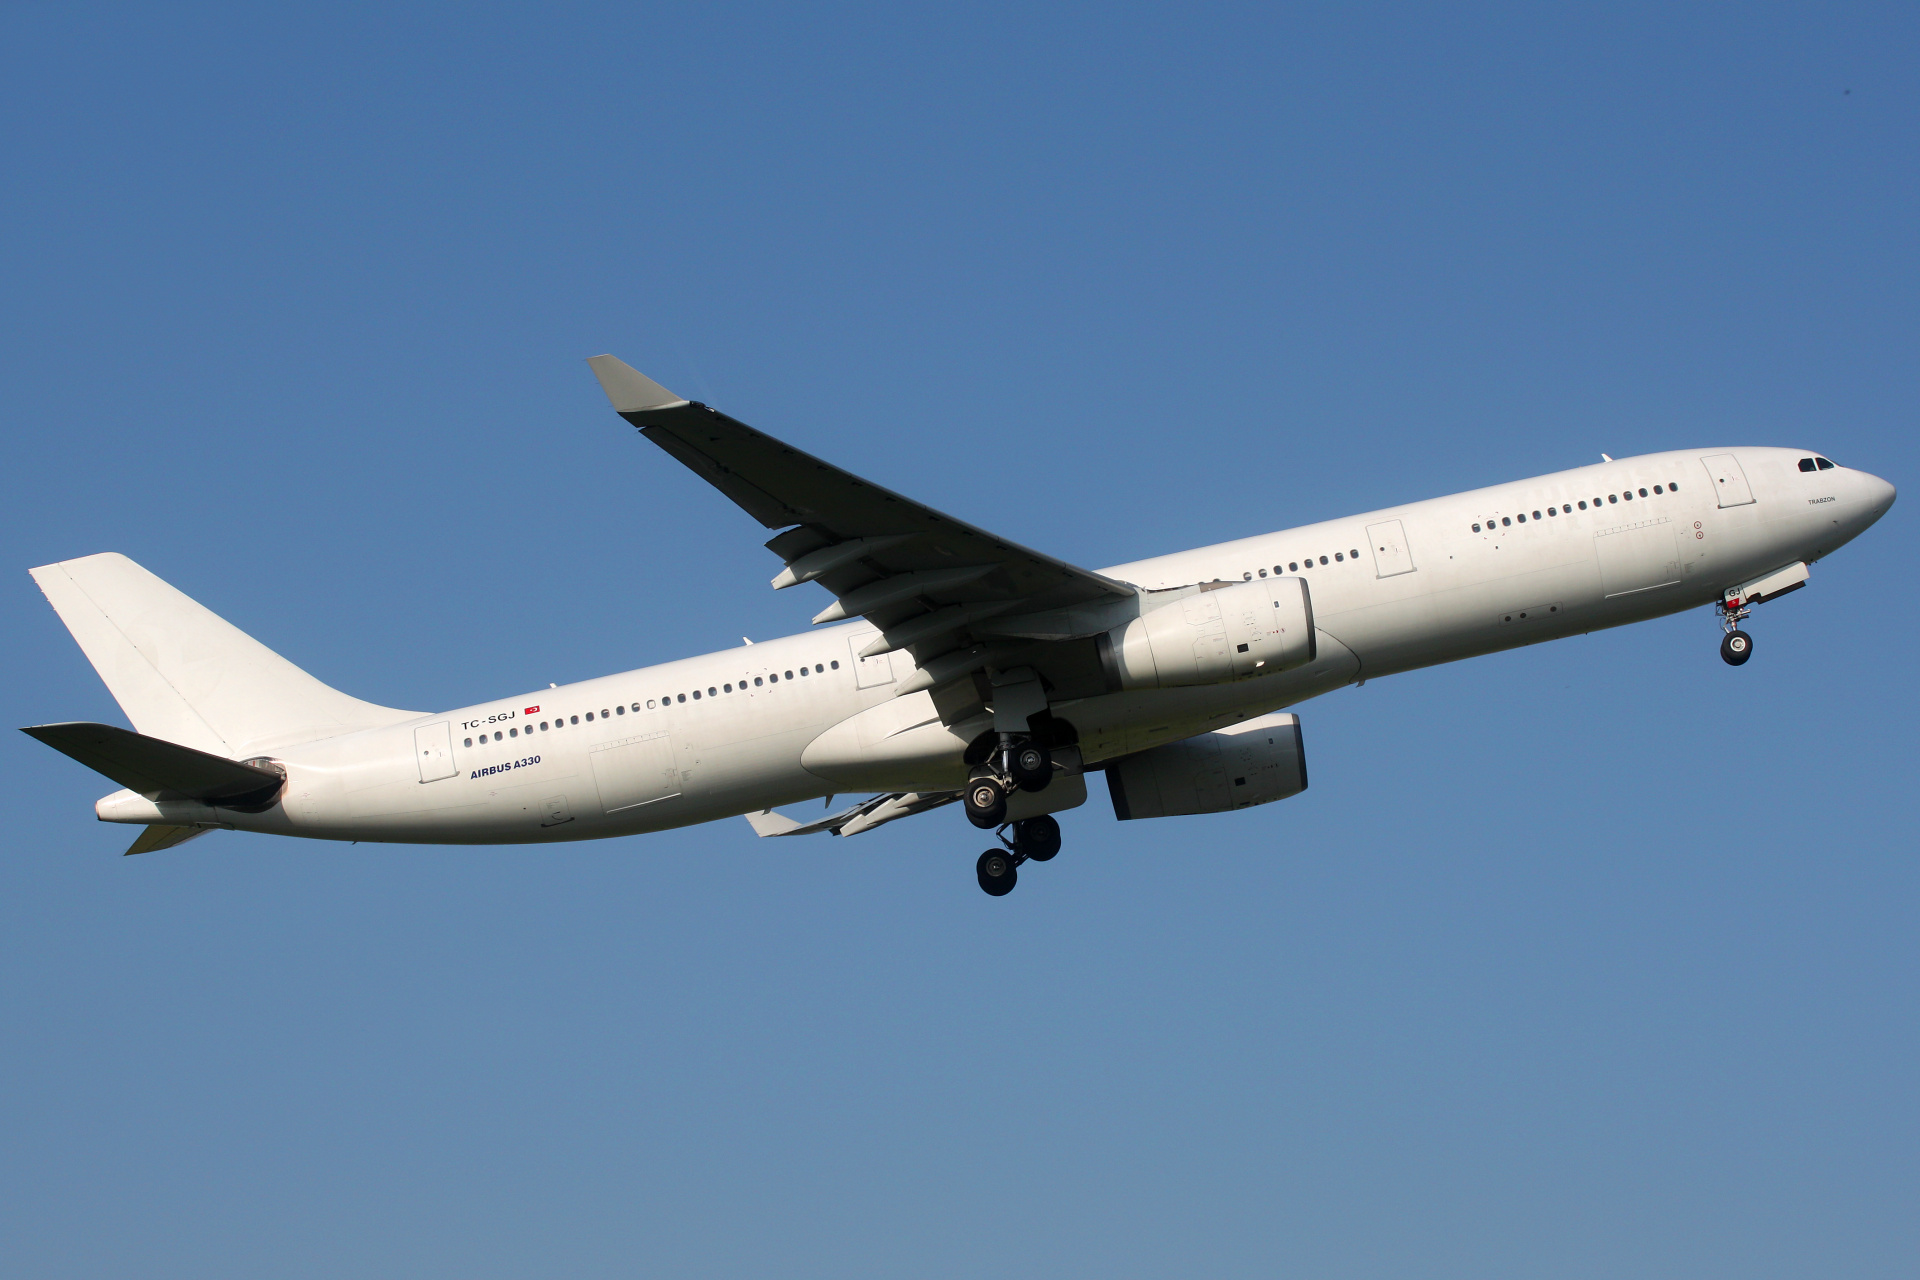 TC-SGJ, Saga Airlines (Aircraft » EPWA Spotting » Airbus A330-300)